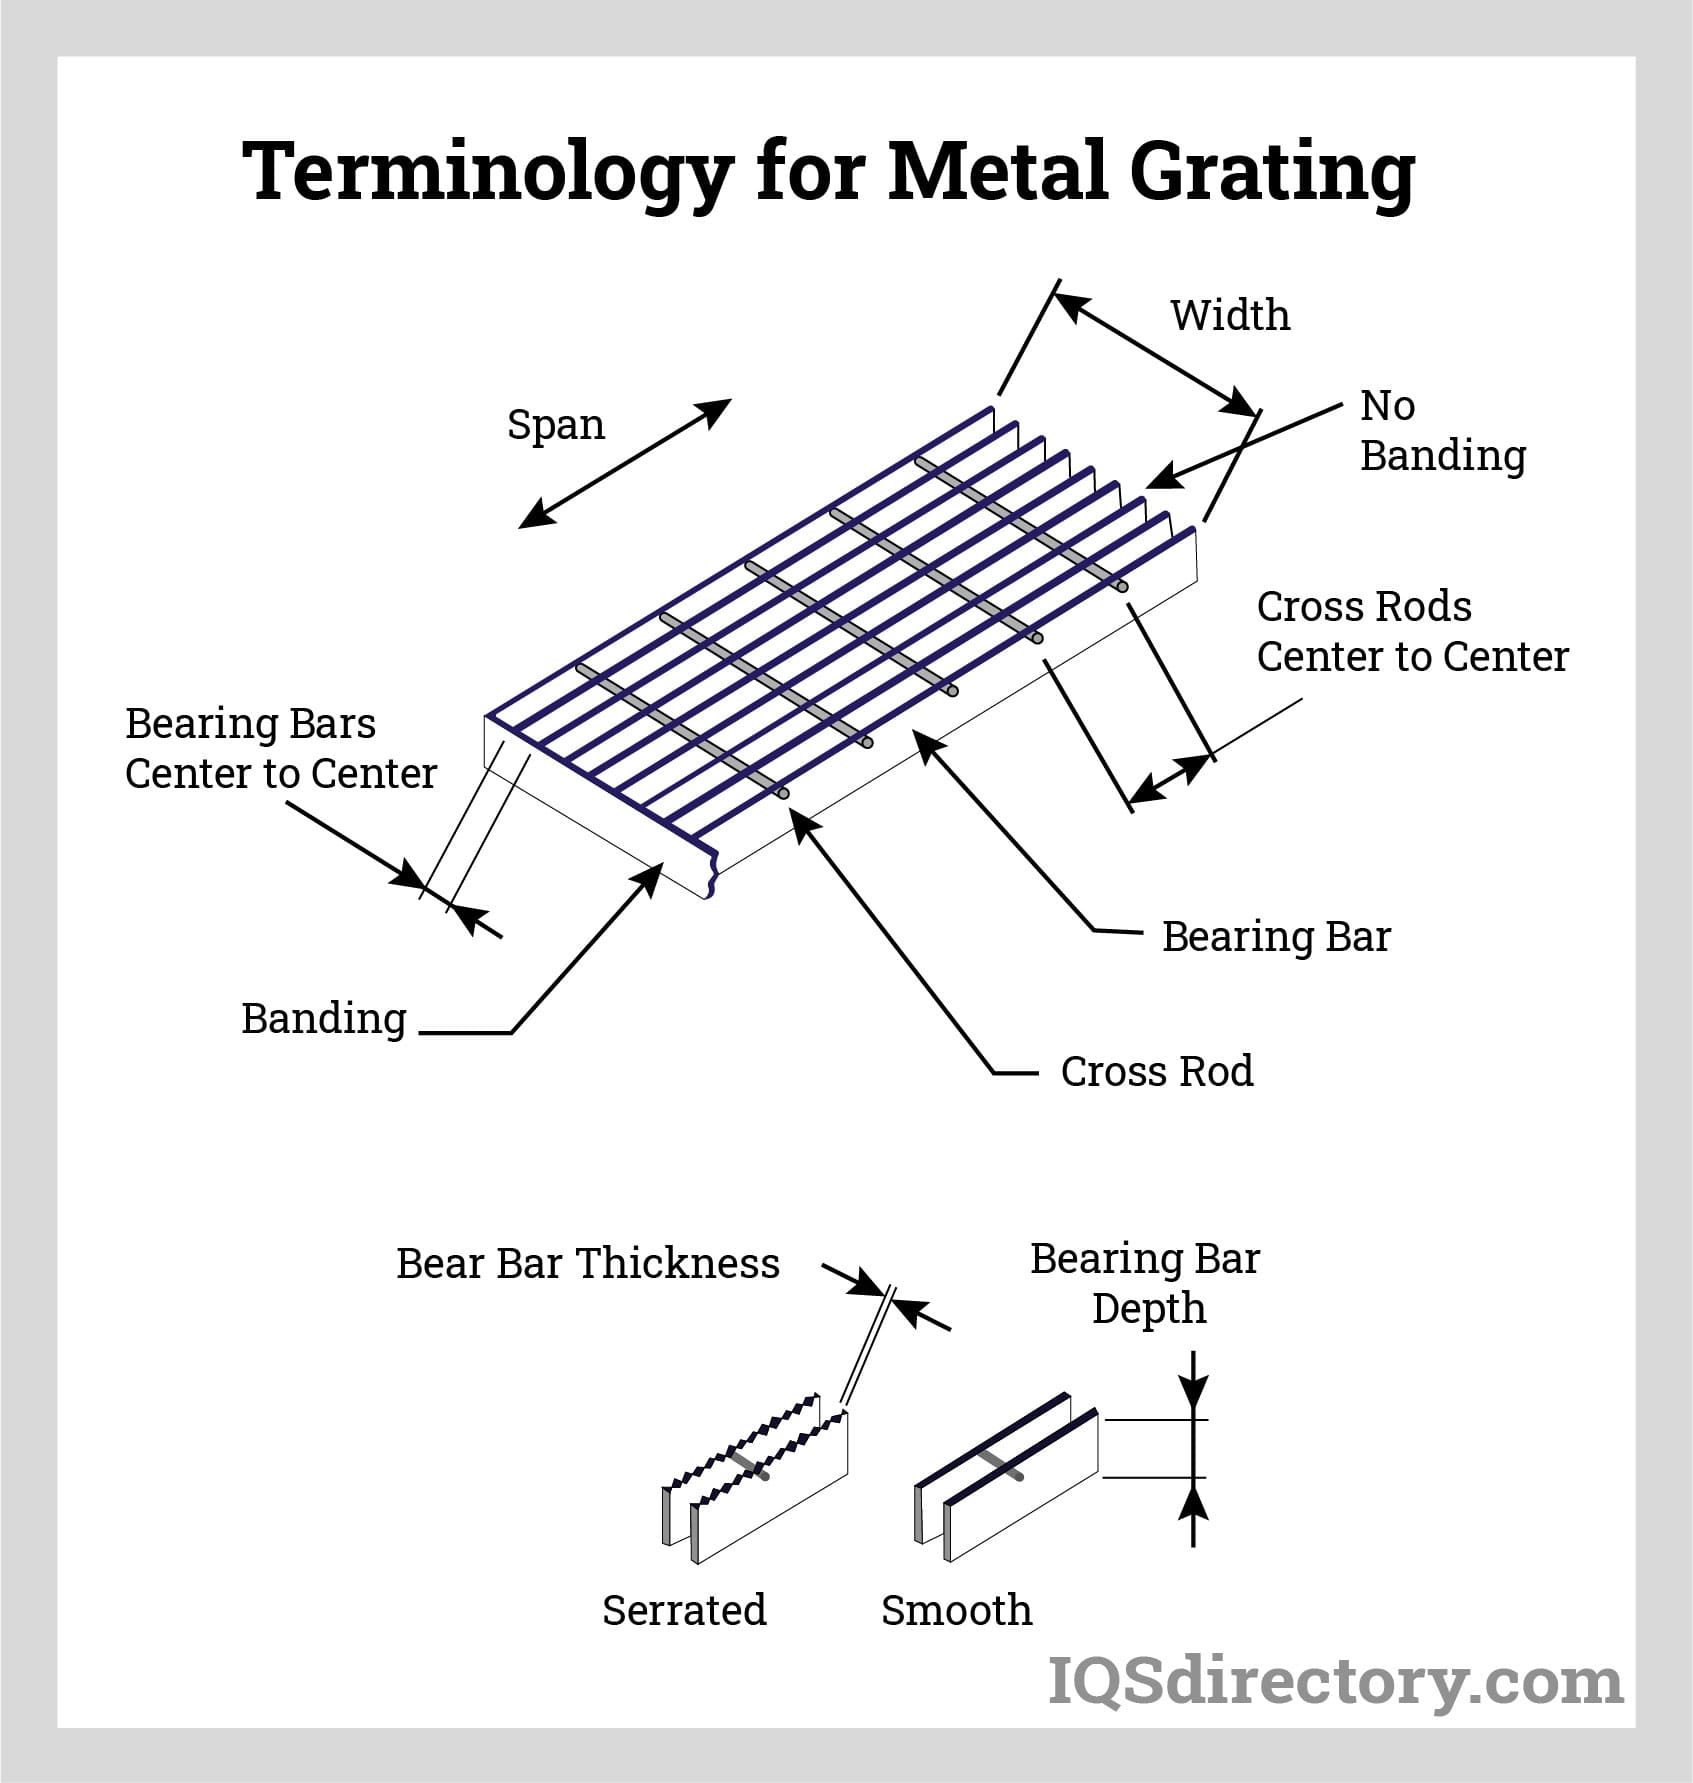 Terminology for Metal Grating